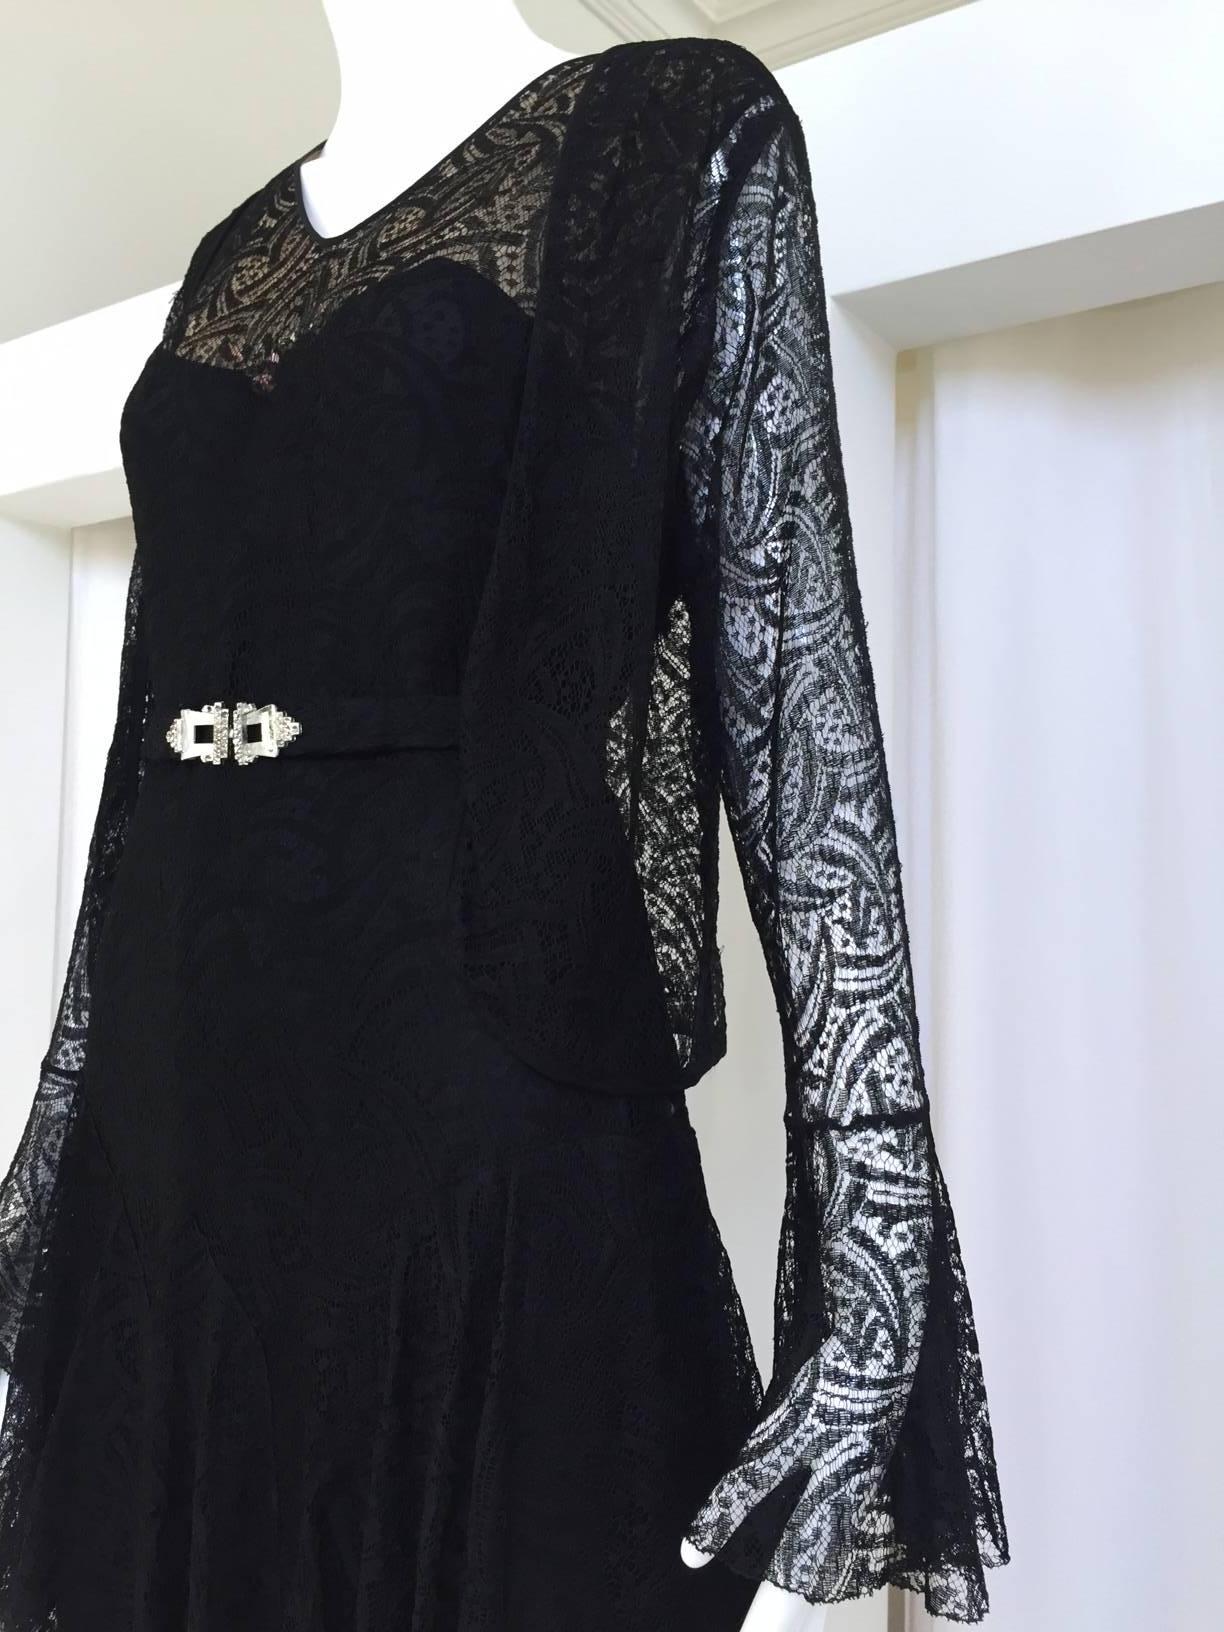 1930s Black lace dress with cardigan jacket and belt ensemble 1